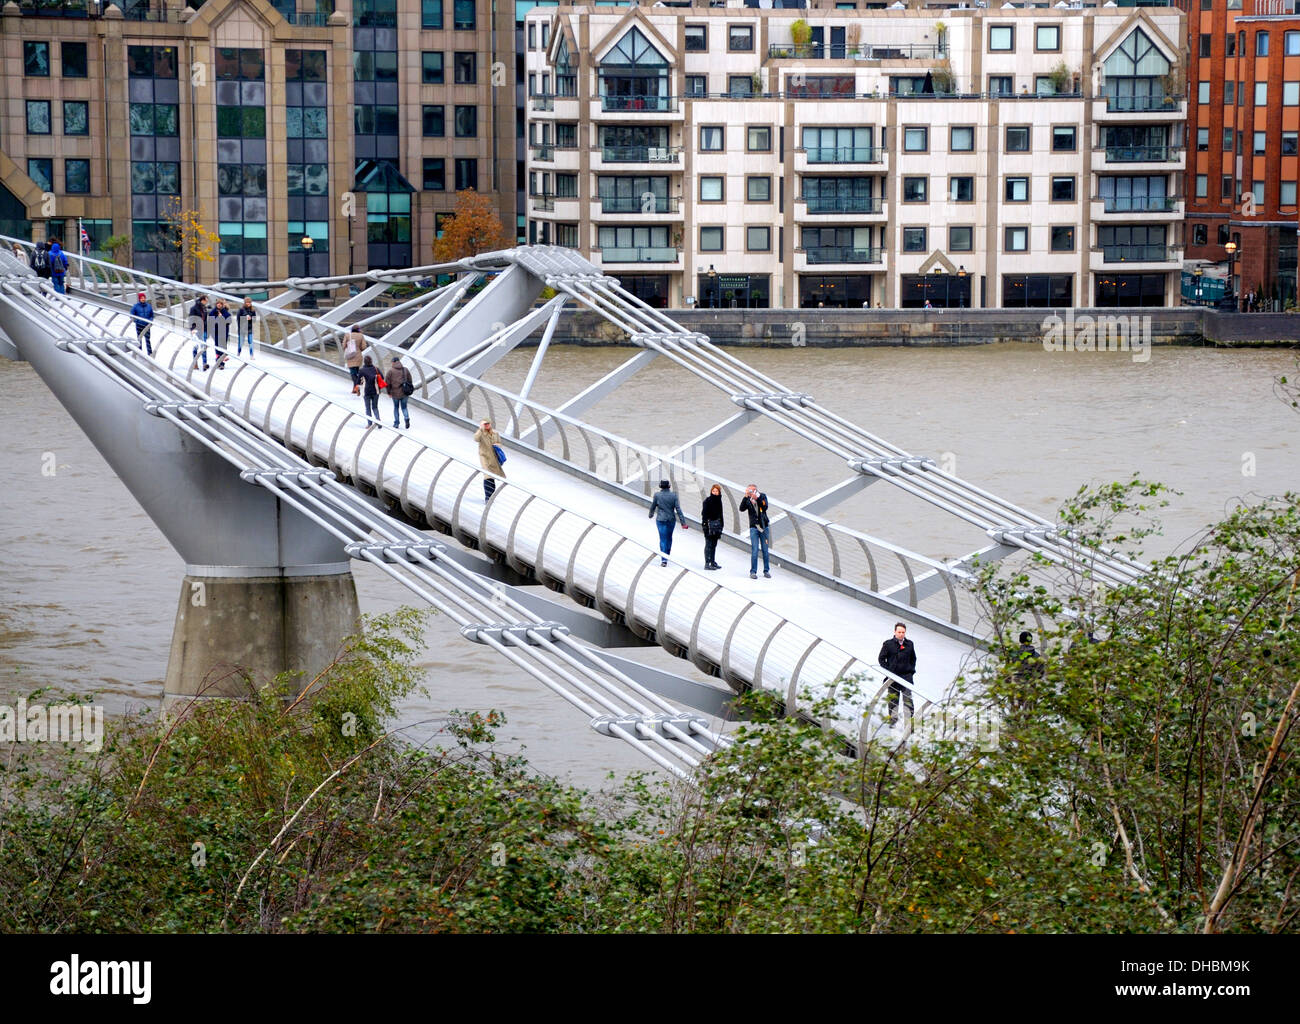 London, England, UK. London Millennium Footbridge (June 2000) steel suspension bridge across the Thames, seen from South Bank Stock Photo